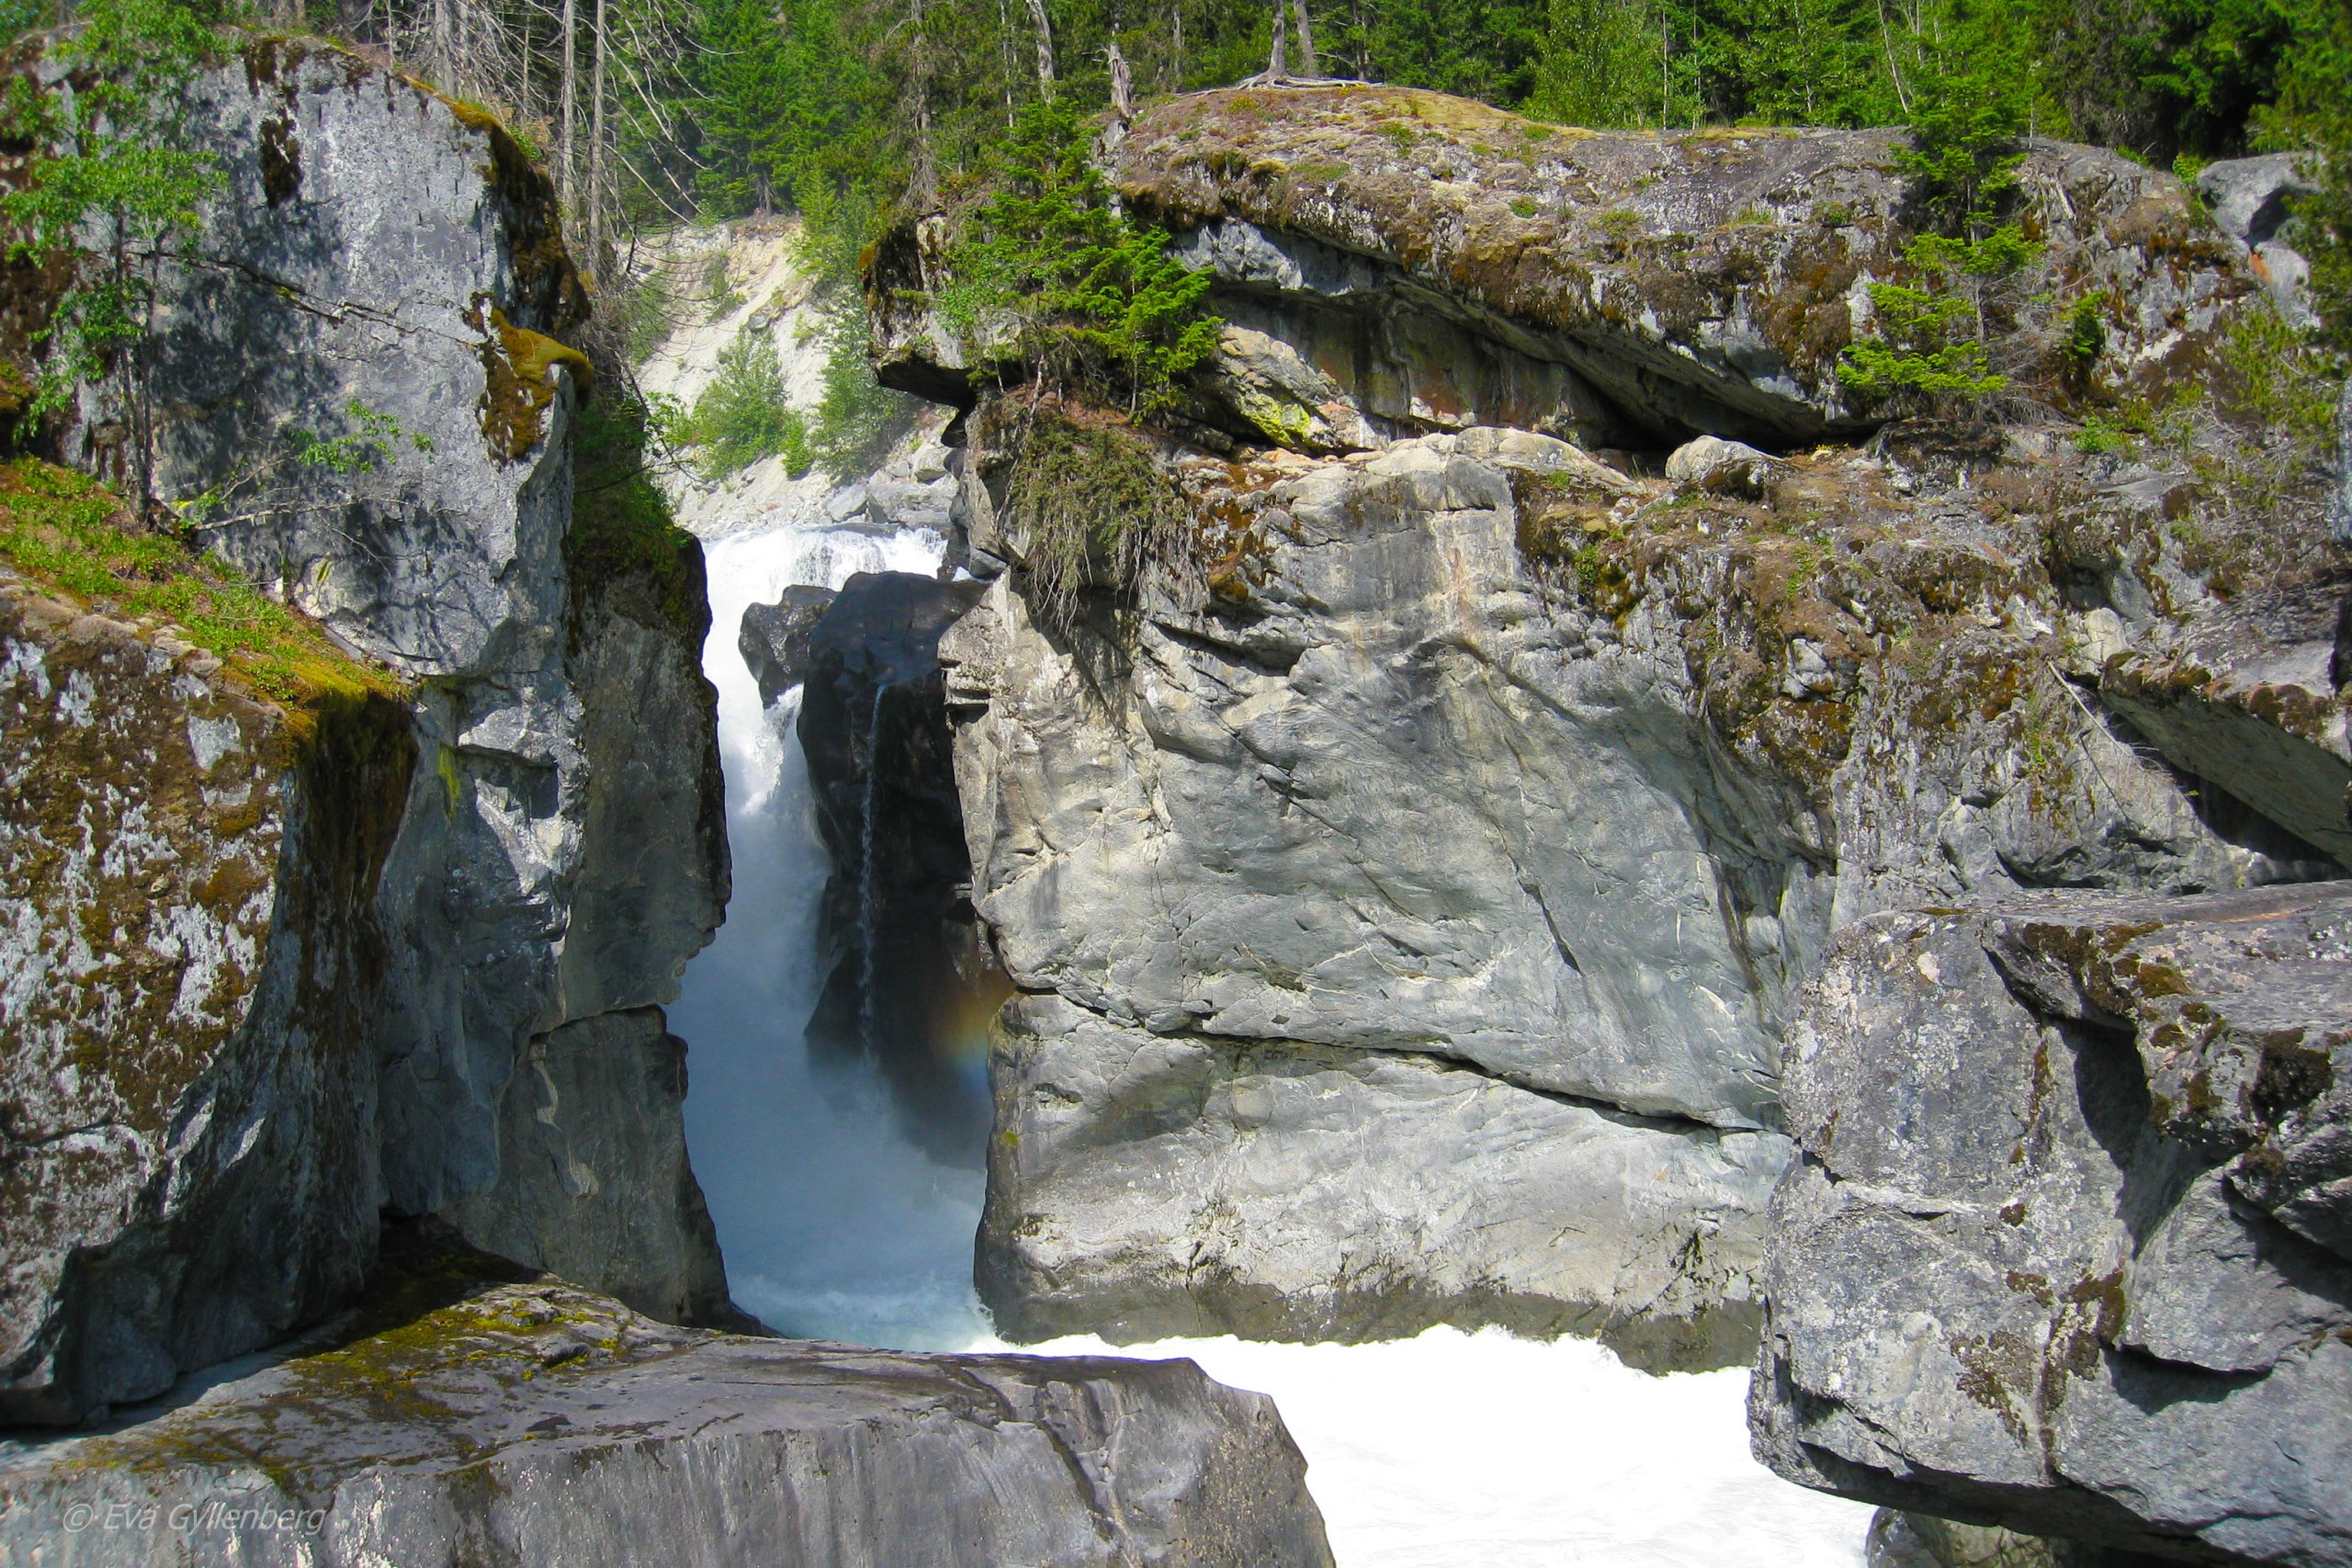 Nairn falls - British Columnbia - Canada